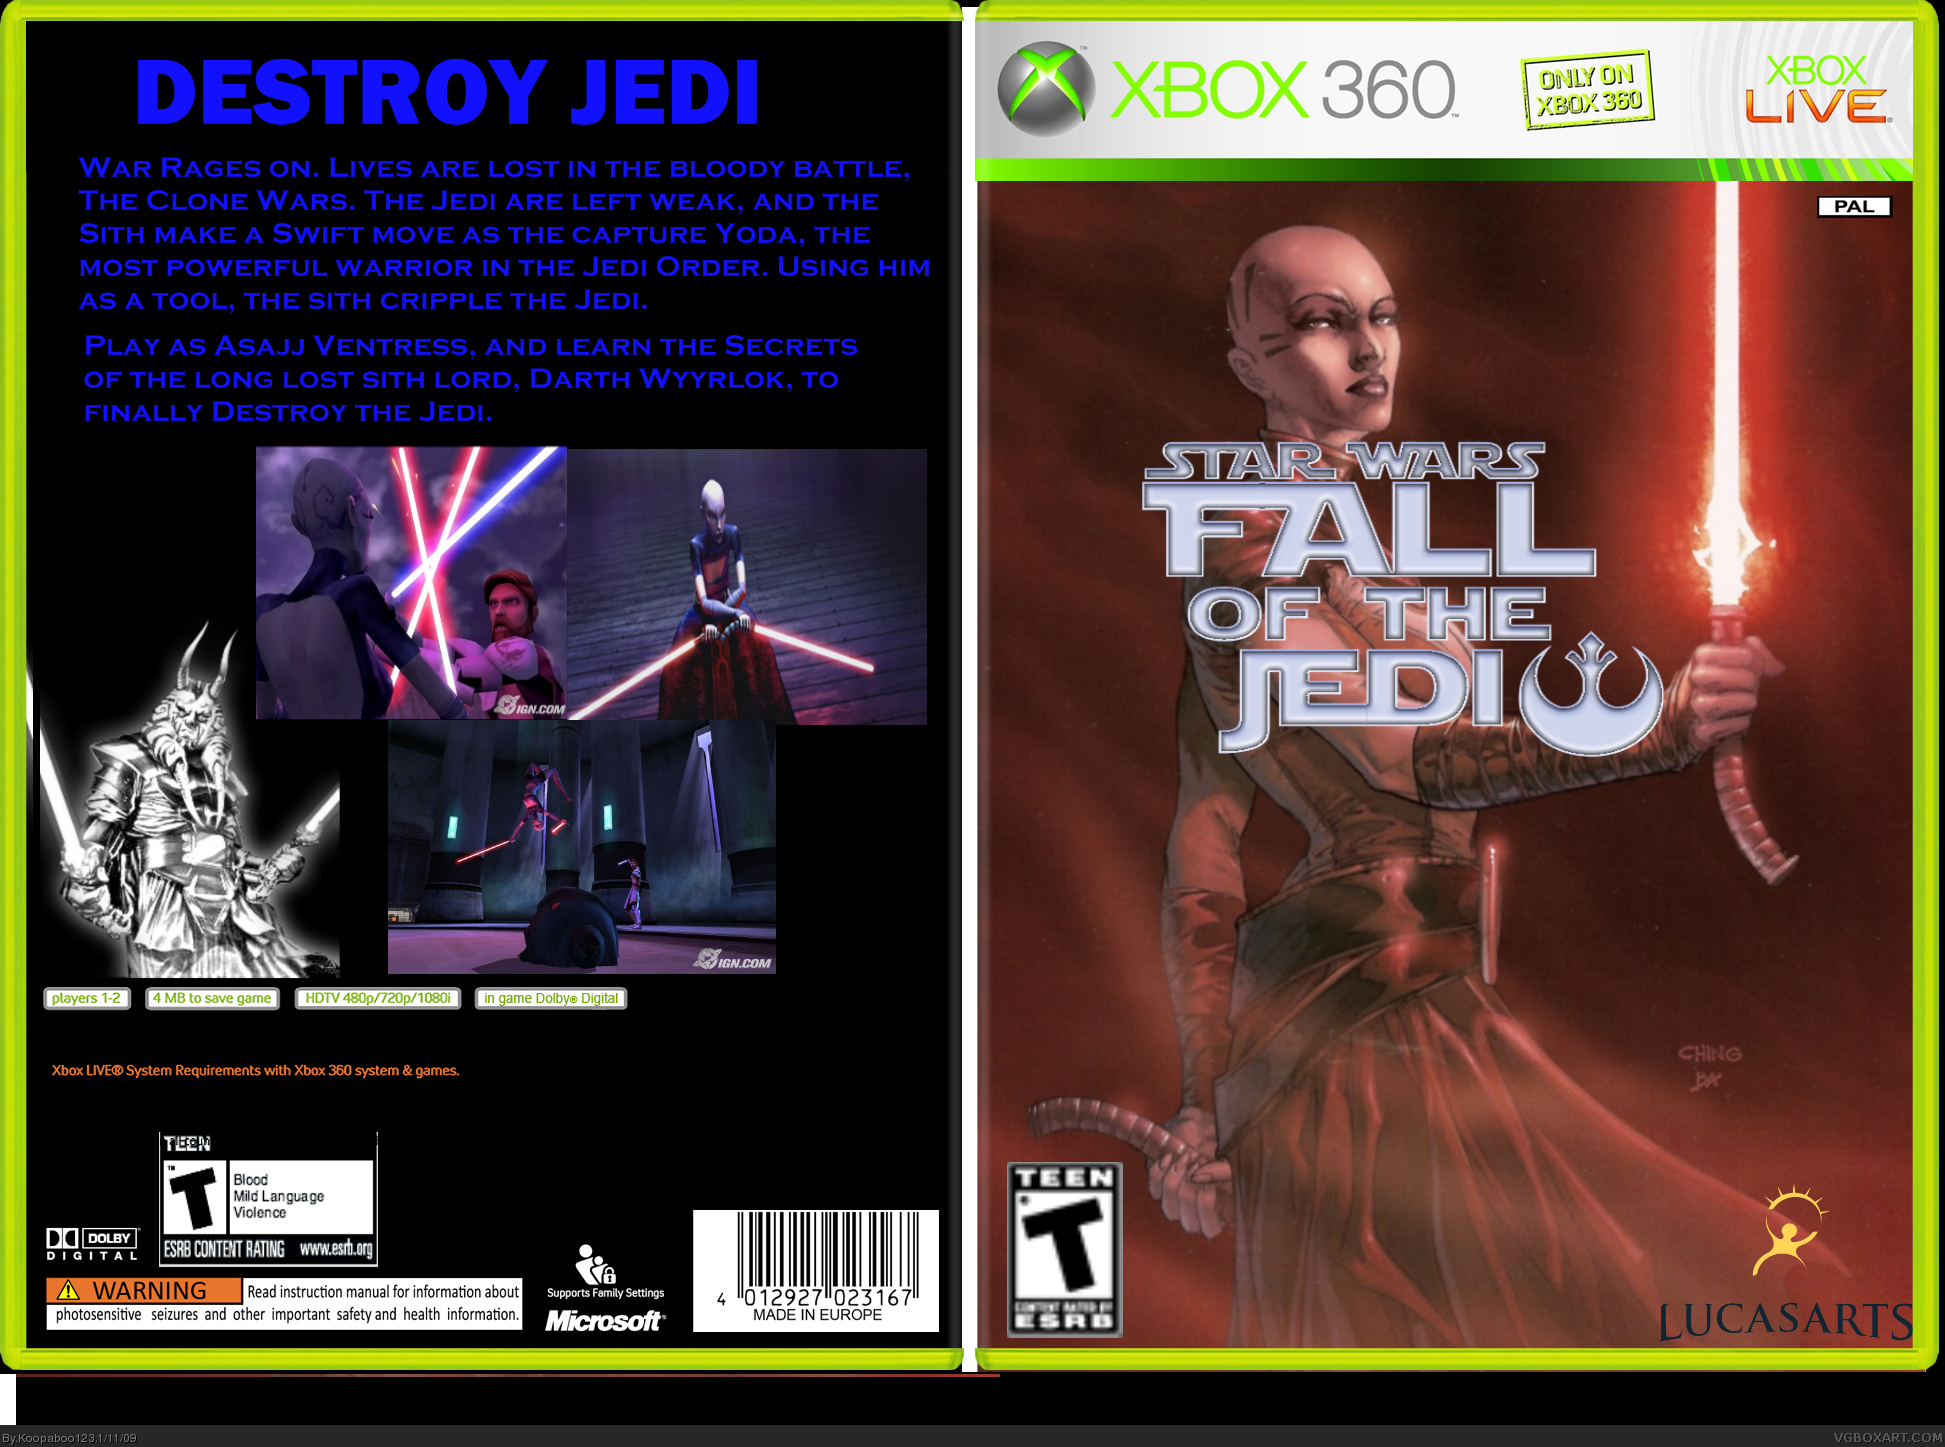 Star Wars: Fall of the Jedi box cover